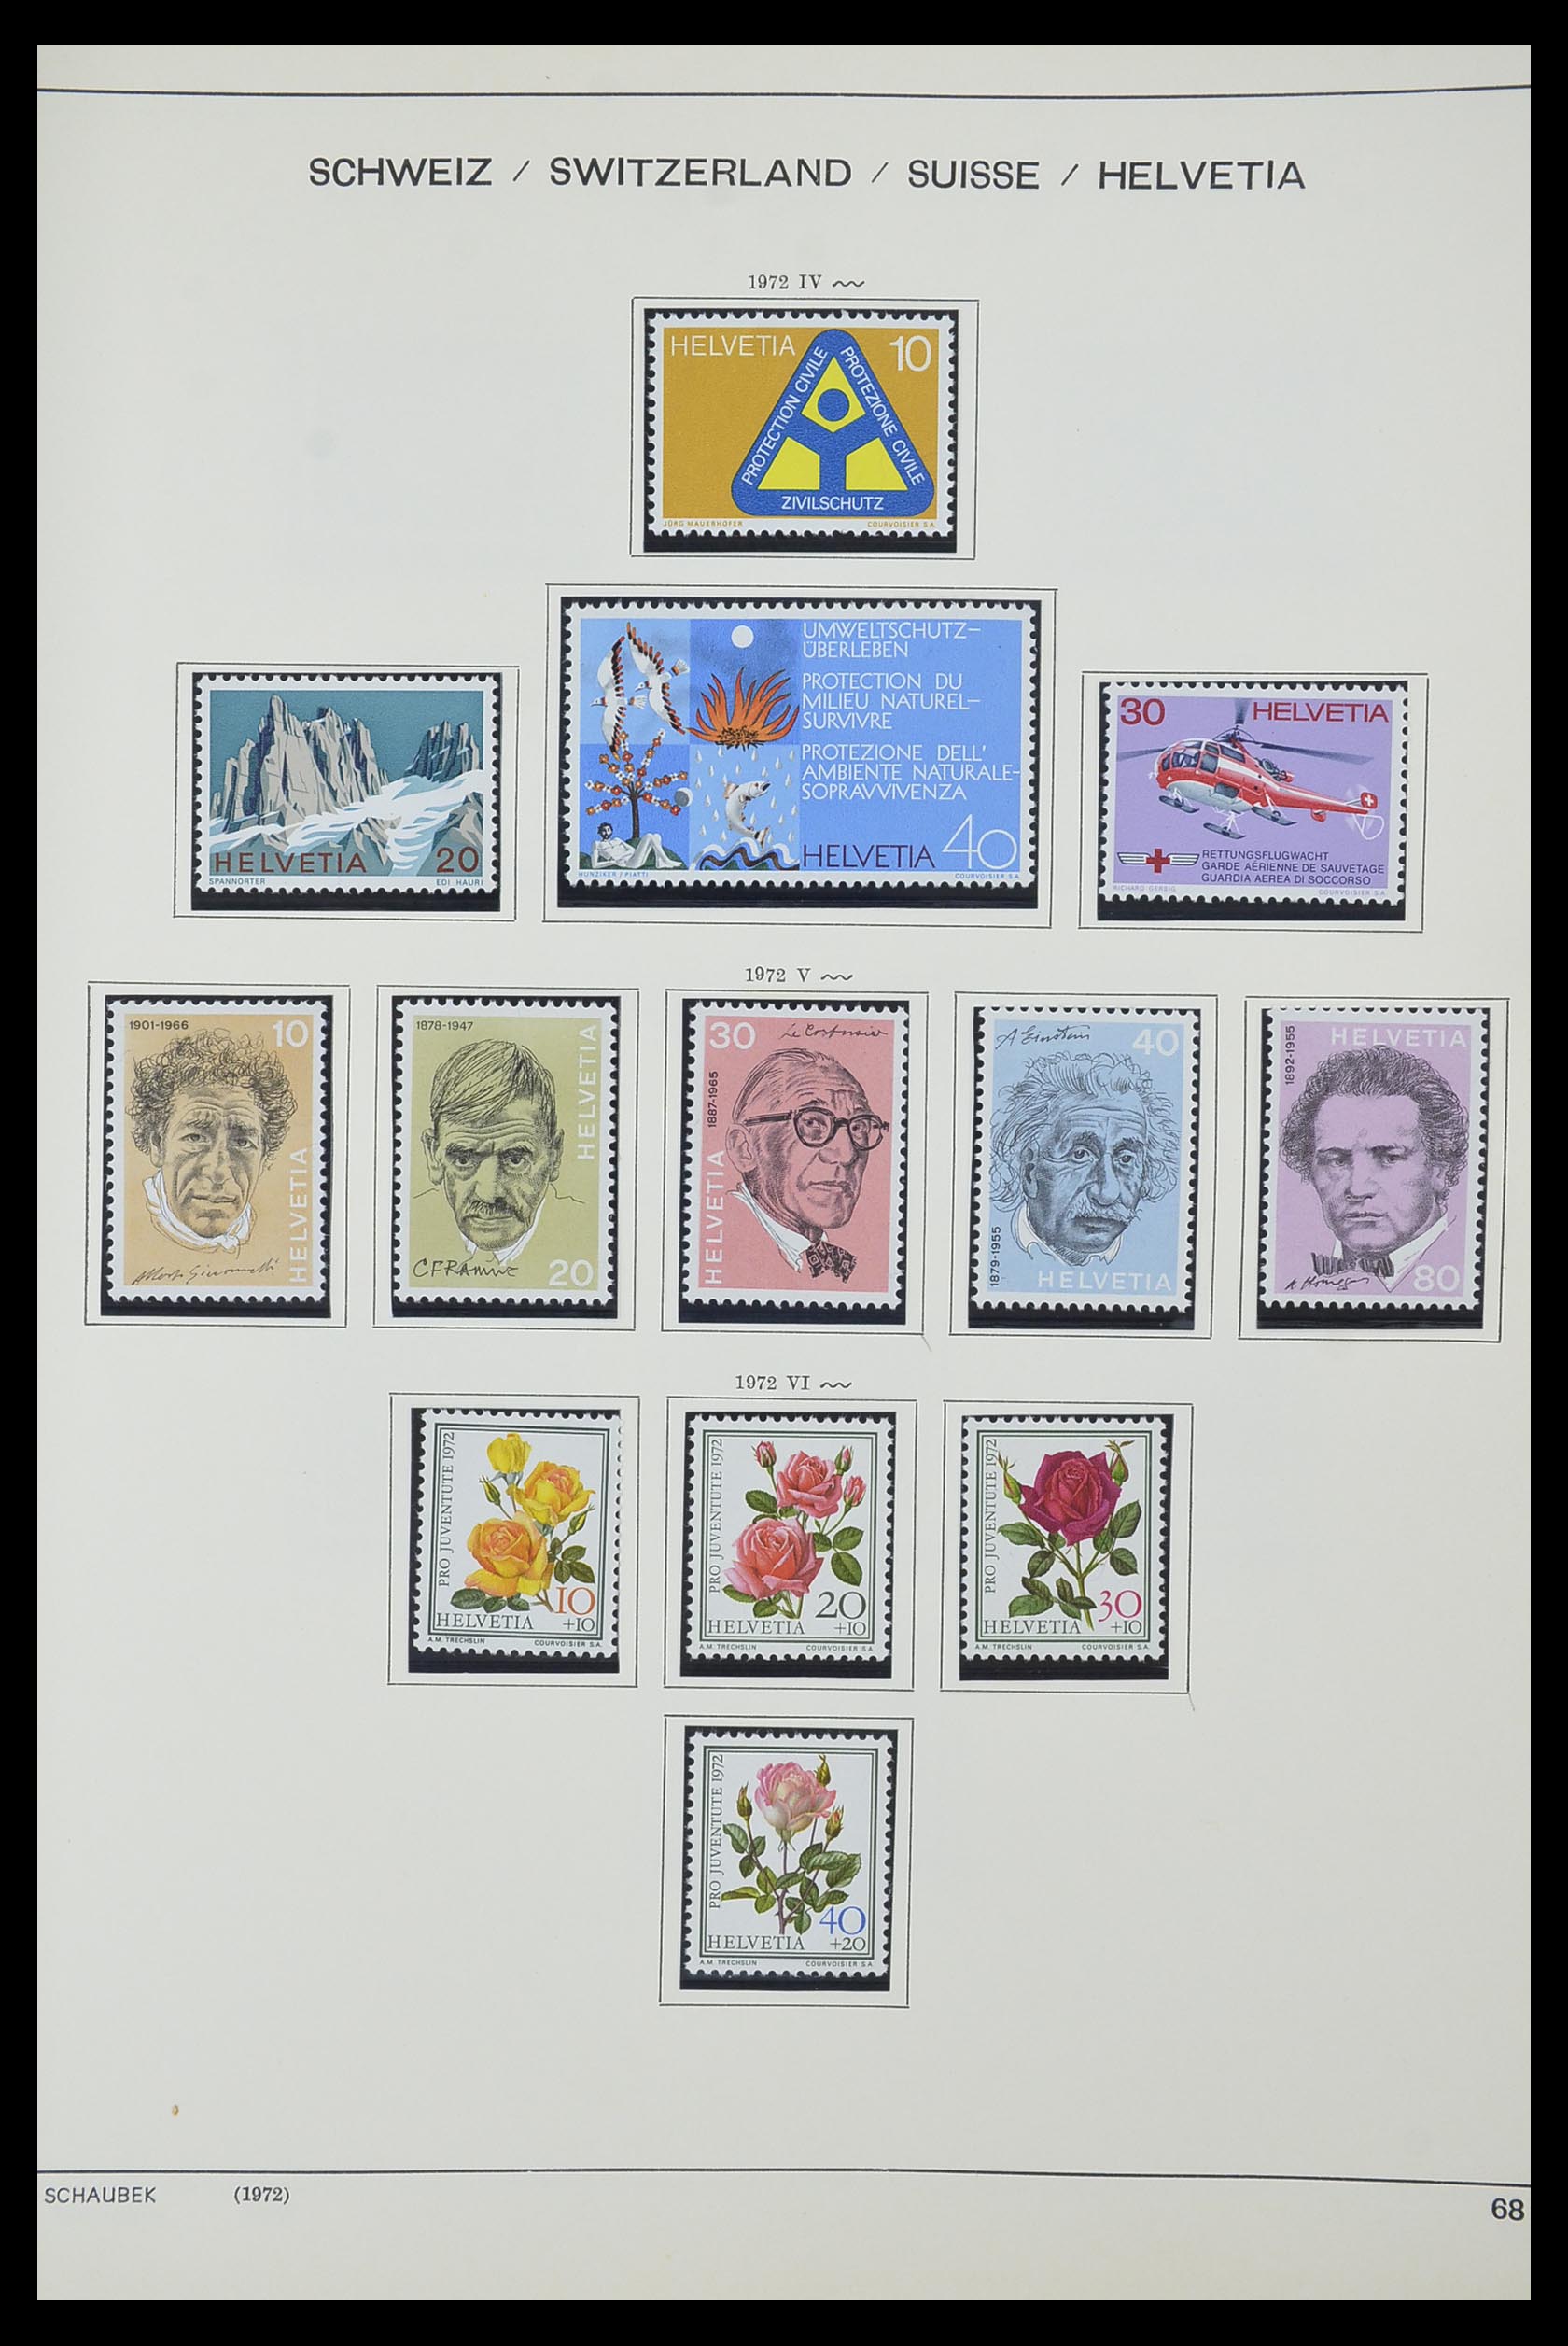 33601 054 - Stamp collection 33601 Switzerland 1854-1985.